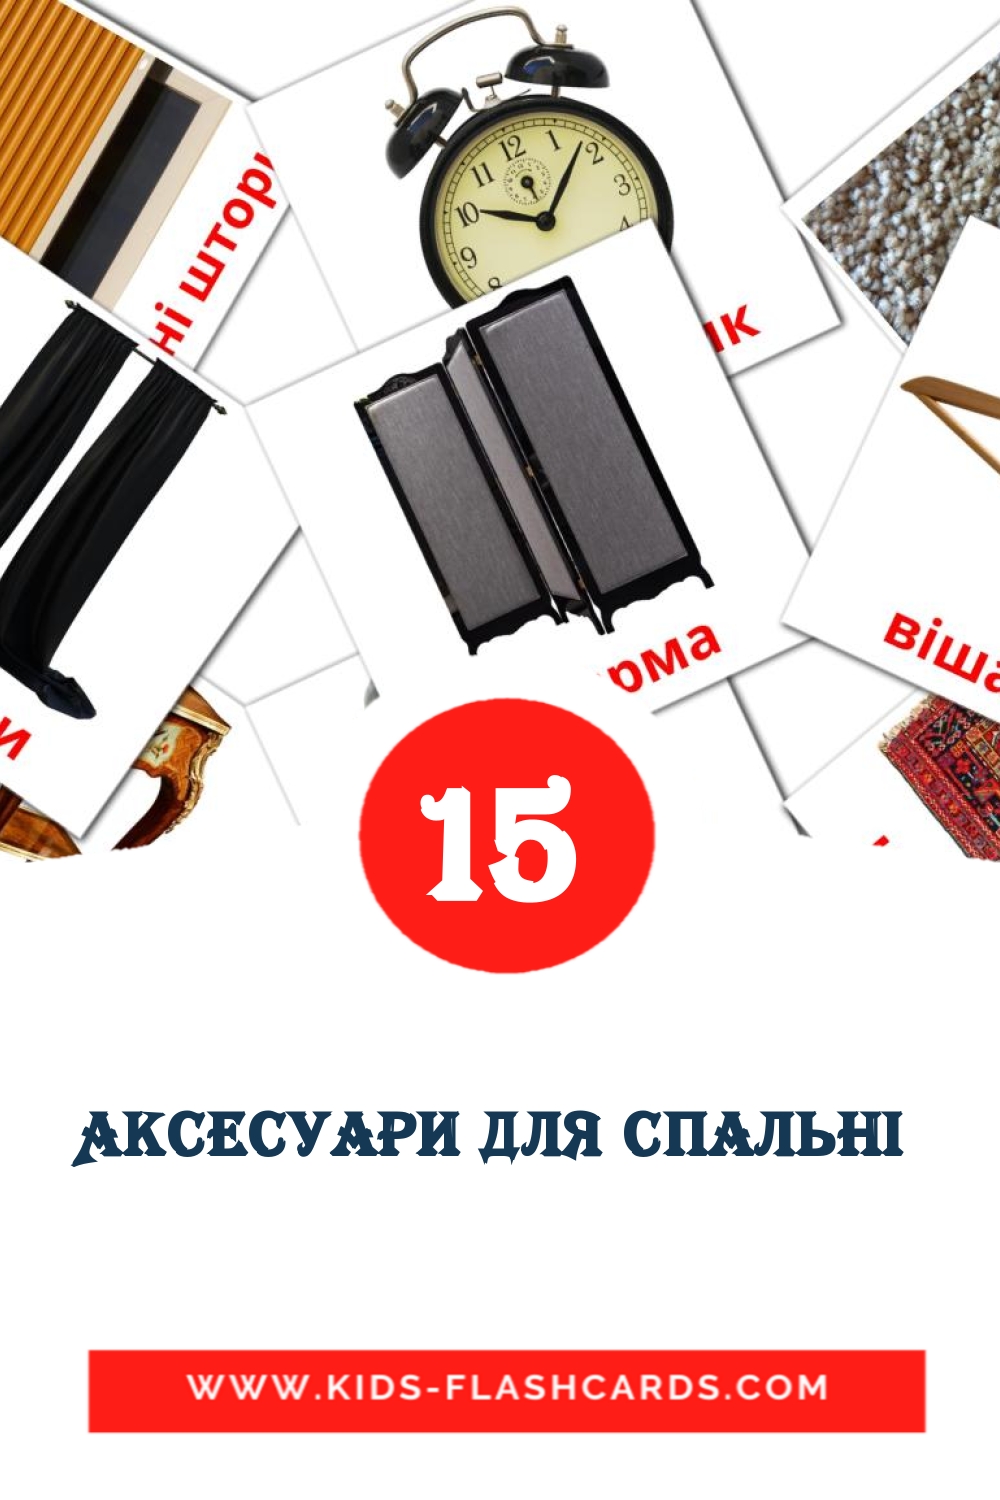 15 Аксесуари для спальні  Picture Cards for Kindergarden in ukrainian